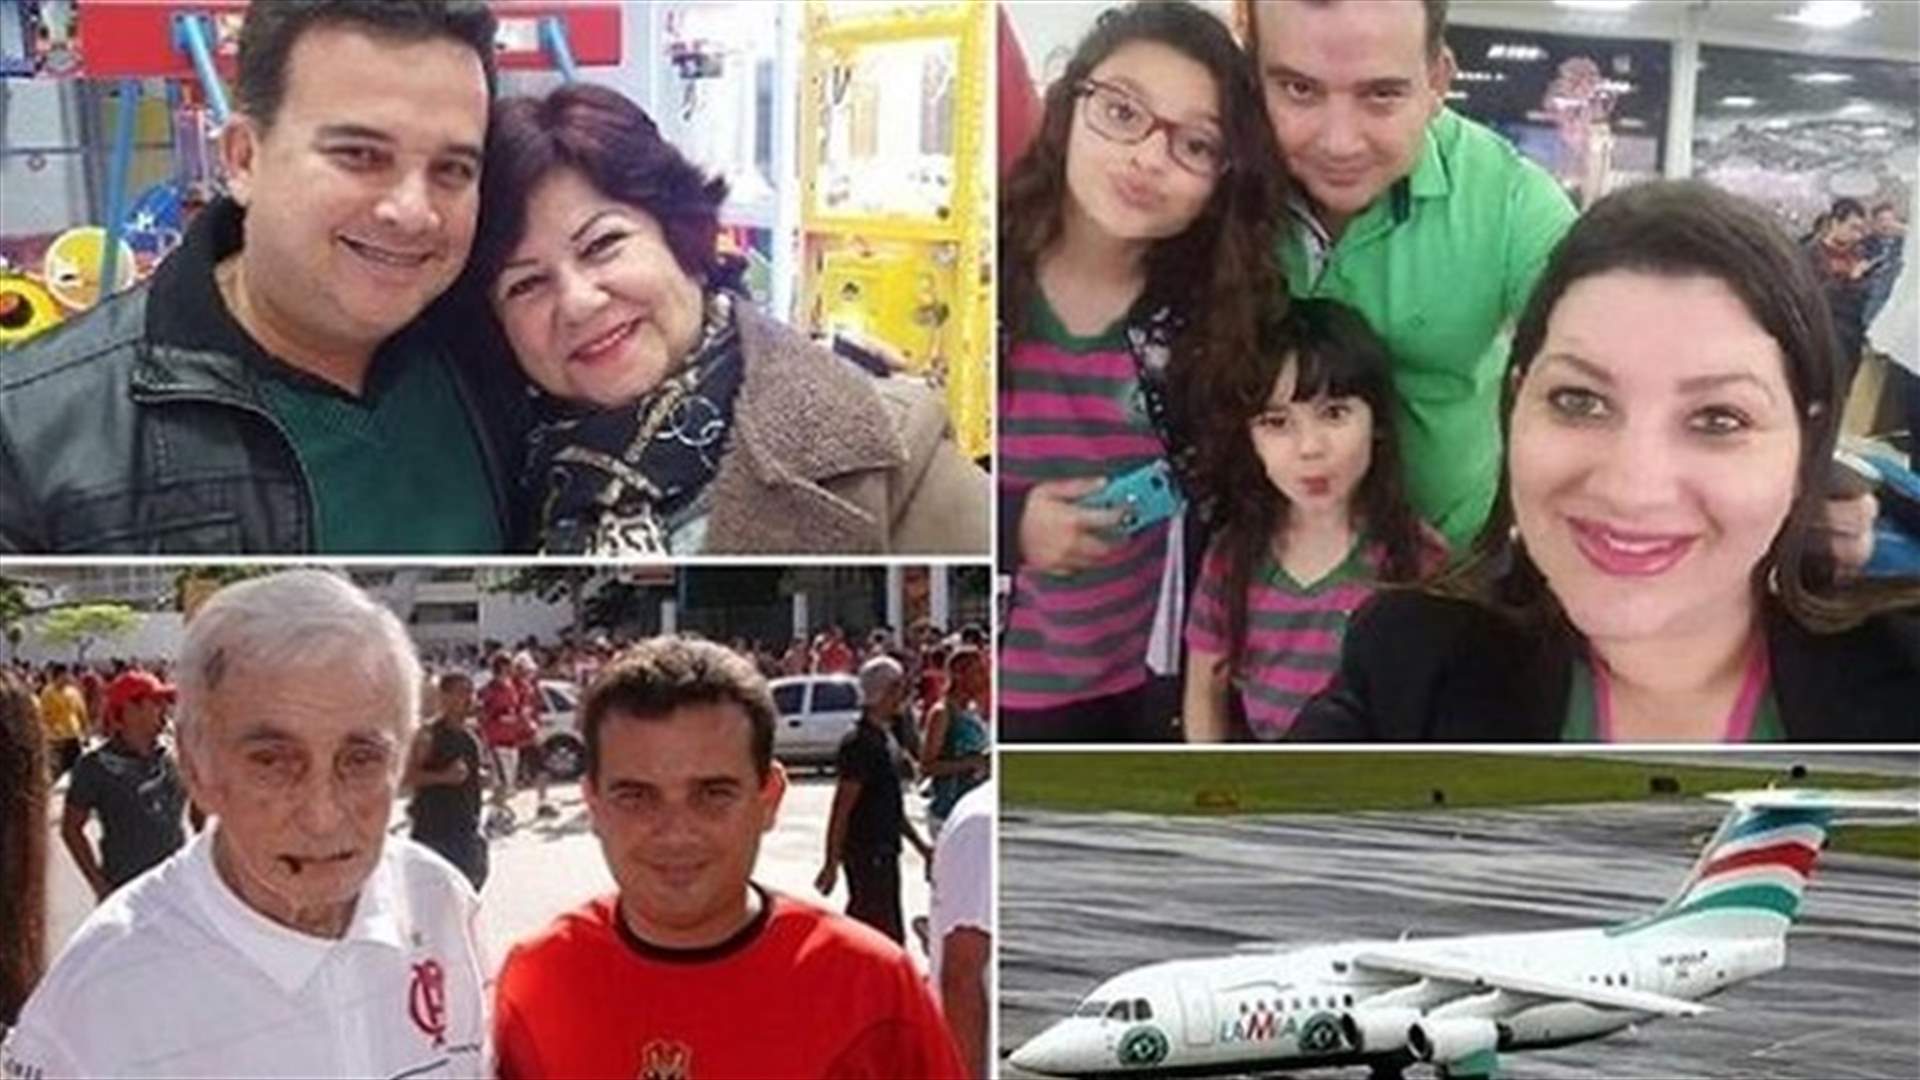 Lebanese physician among victims of Bolivian plane crash